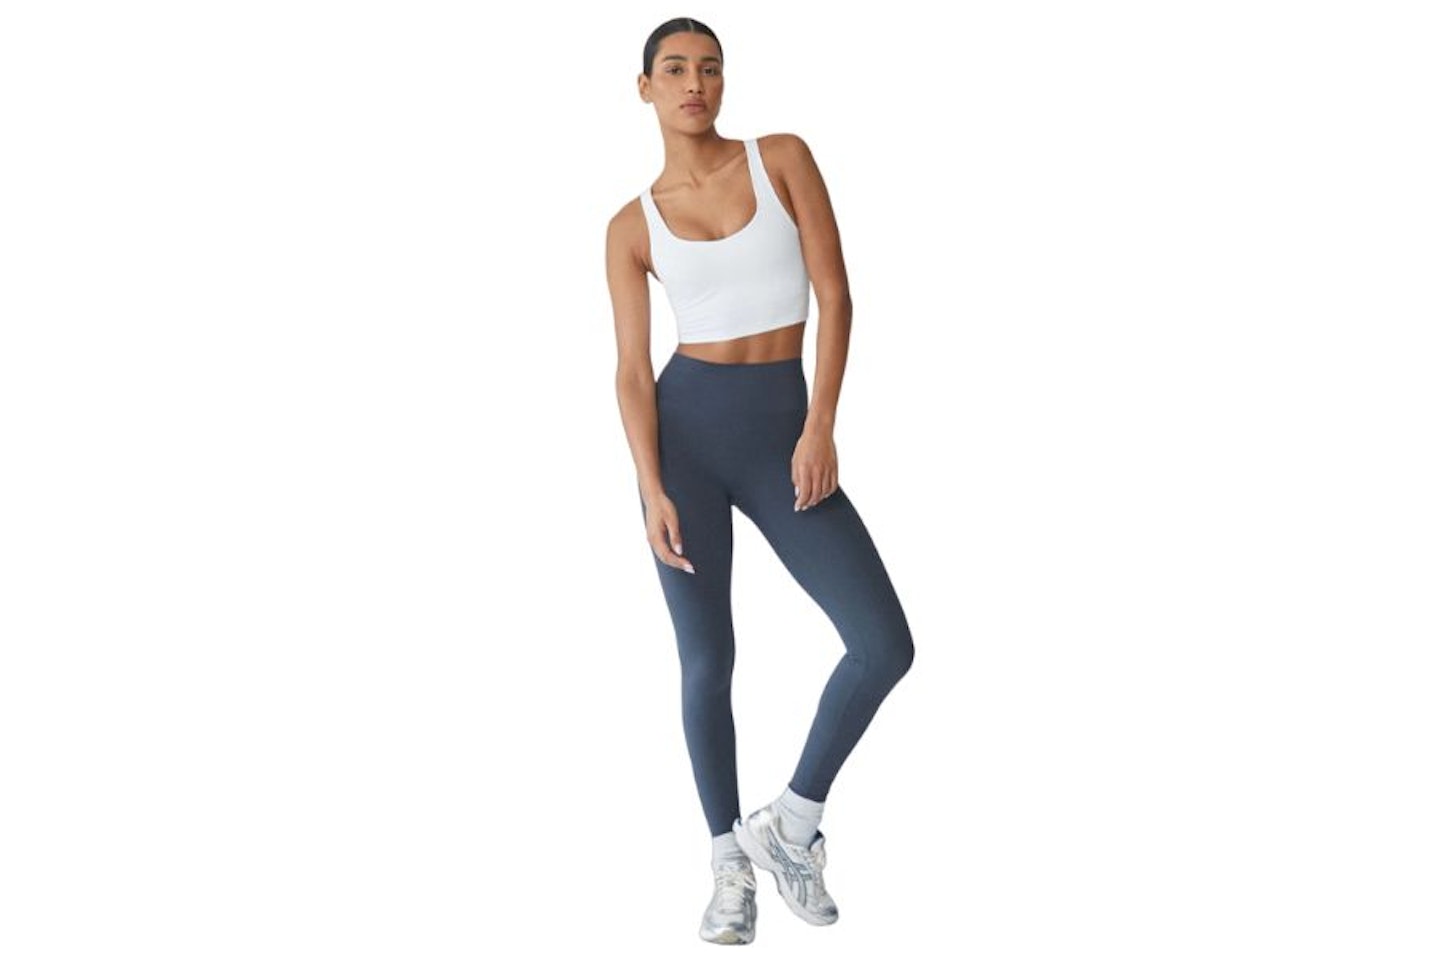 19 top best Adanola leggings sets for gym ideas in 2024